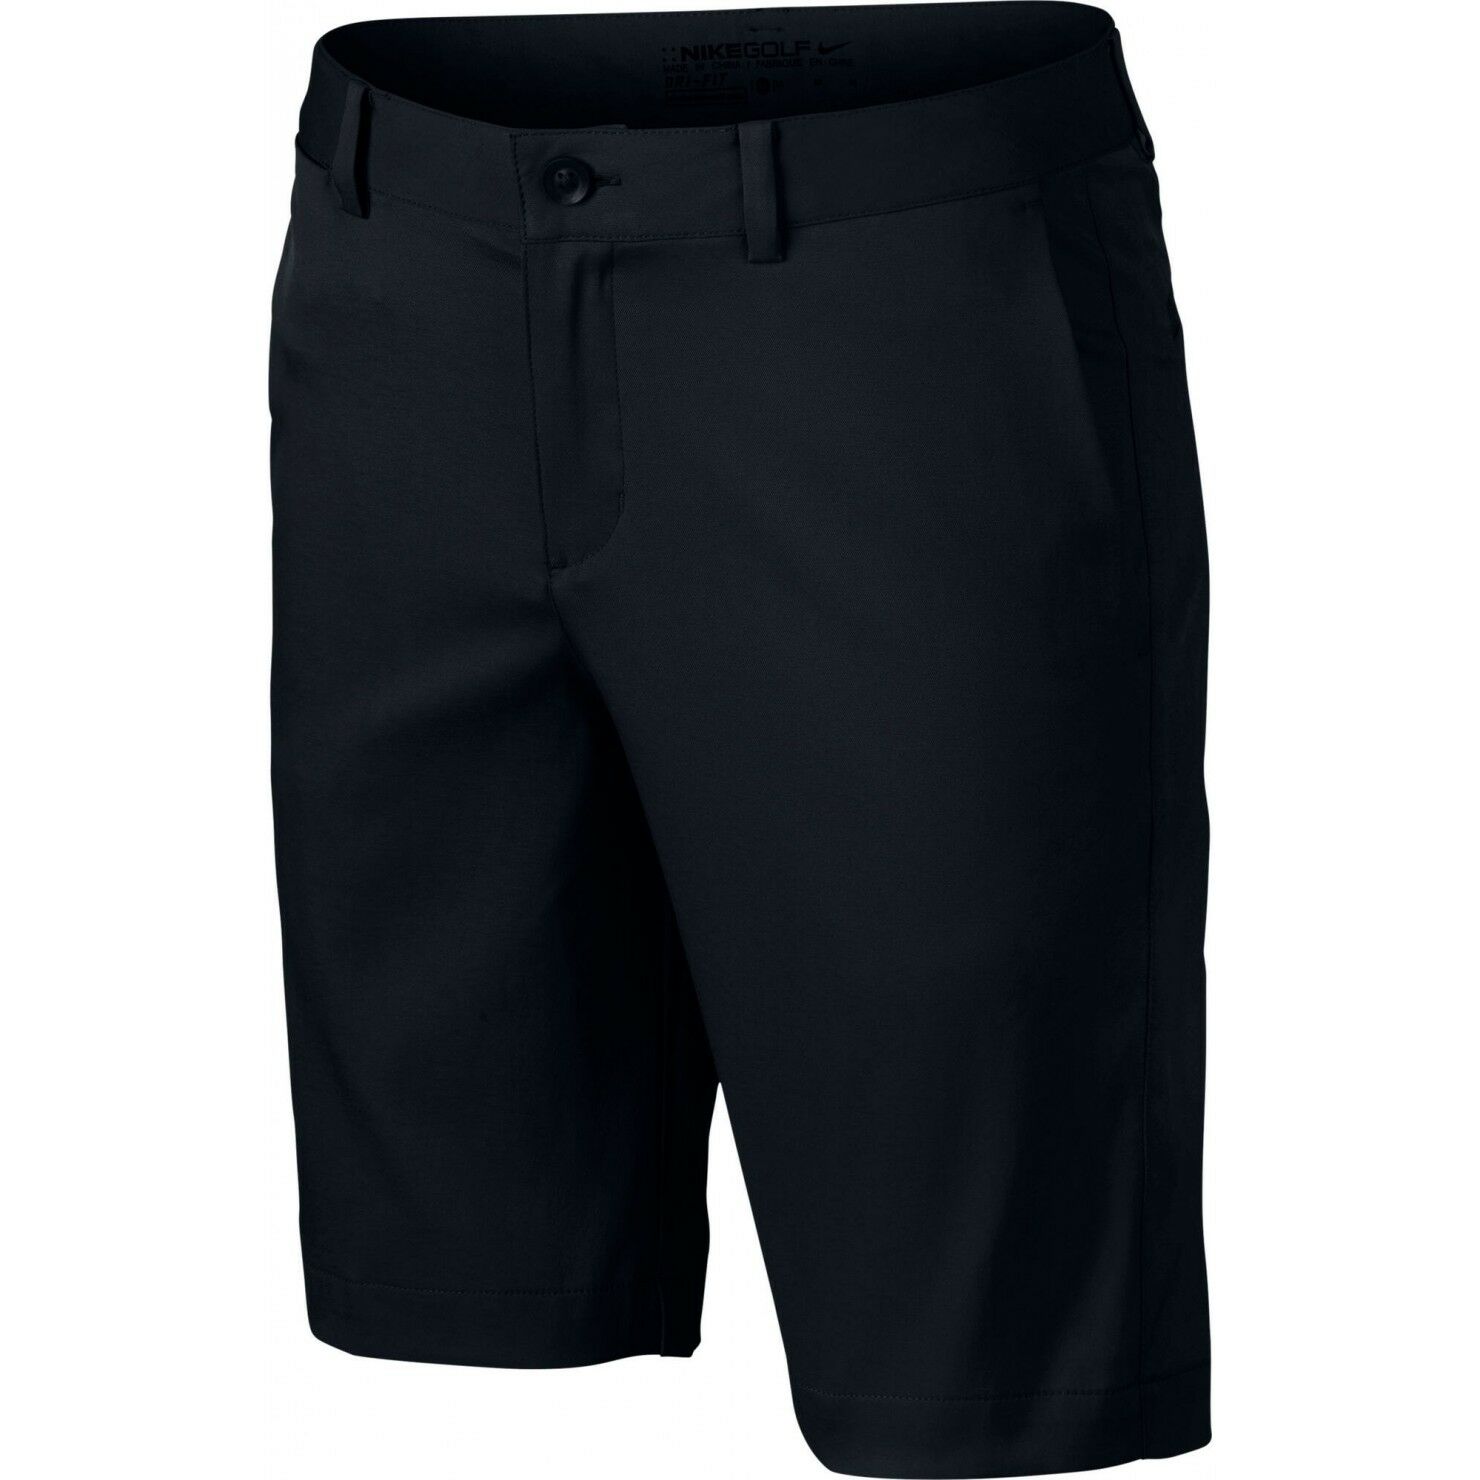 Nwt Nike Youth Big Boys Dri-fit Flat Front Golf Shorts Size S M L Xl 832770